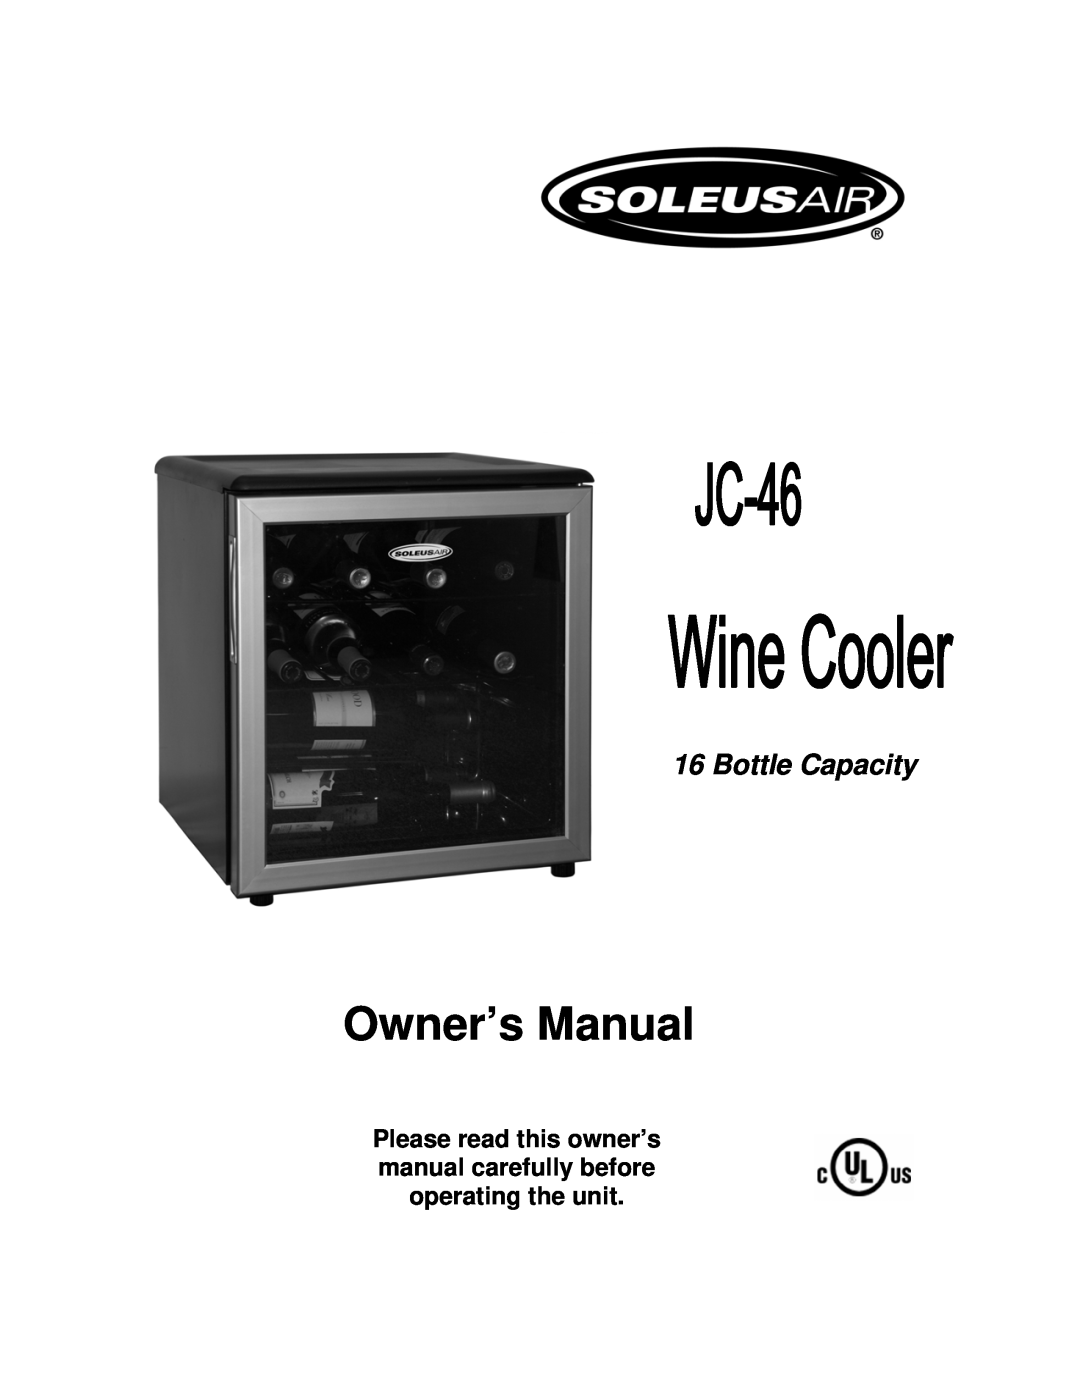 Soleus Air JC-46 owner manual Bottle Capacity 